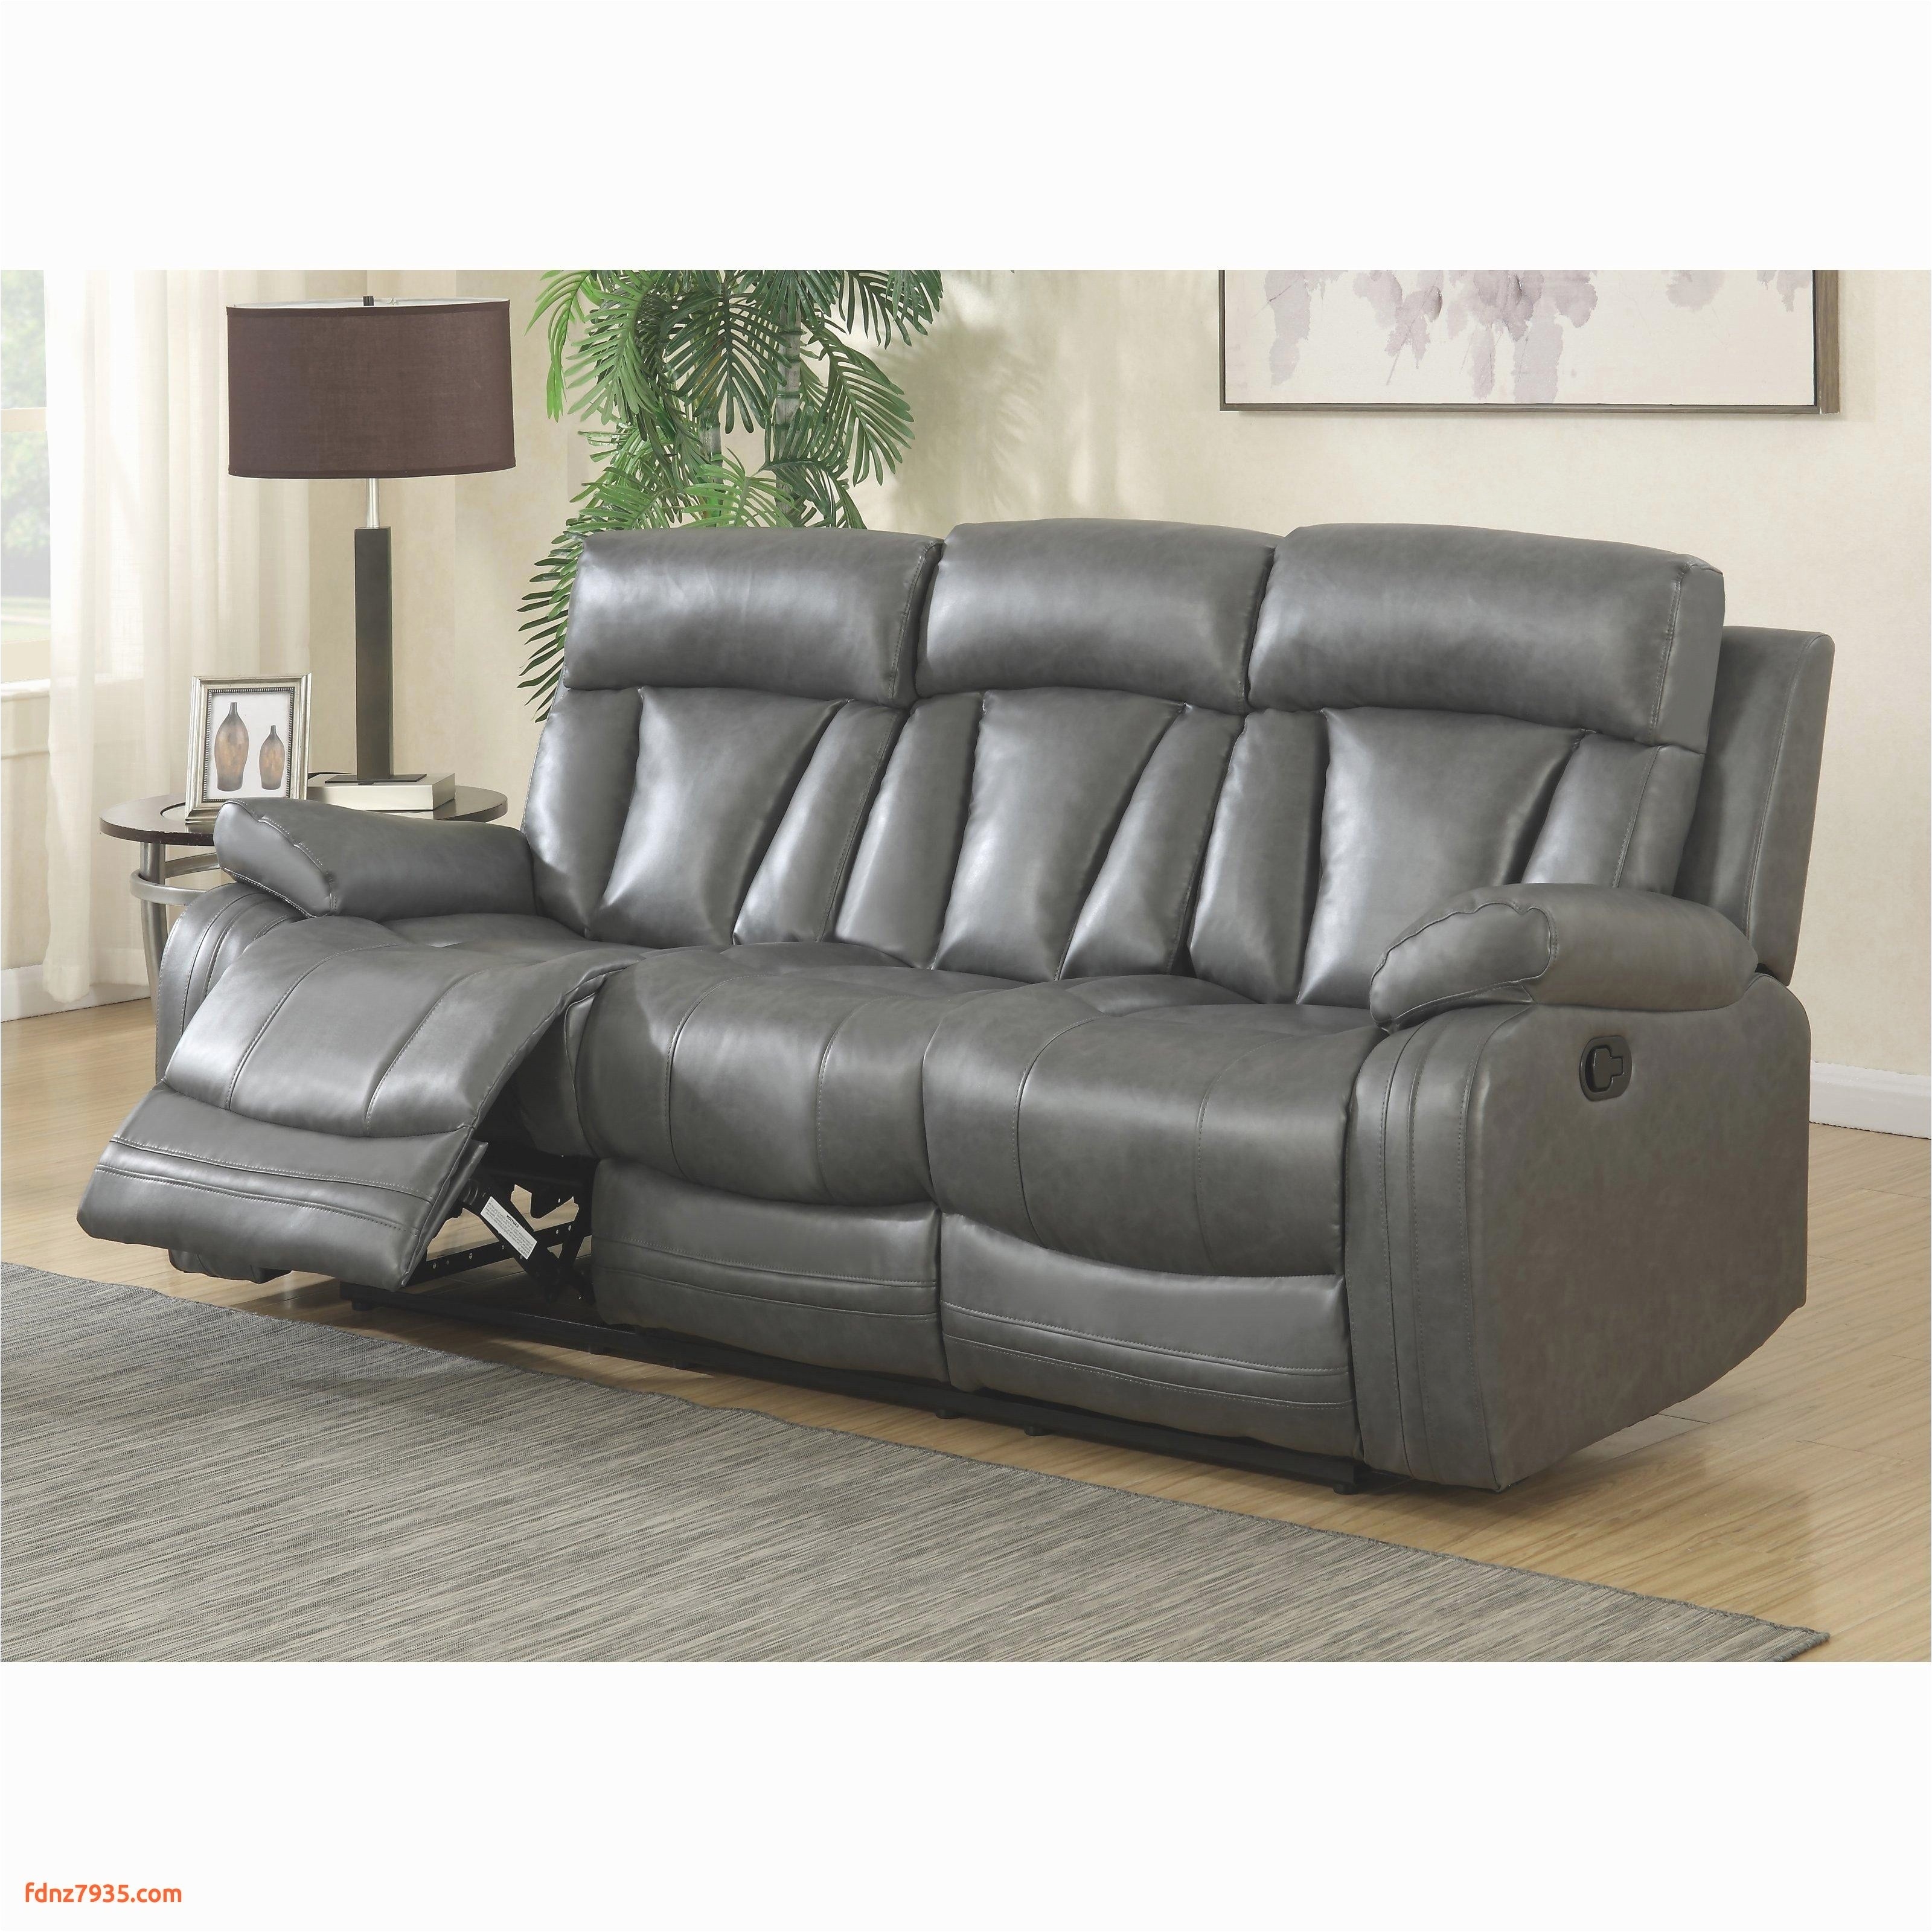 leather sofa gray gray leather sofa and loveseat fresh sofa design